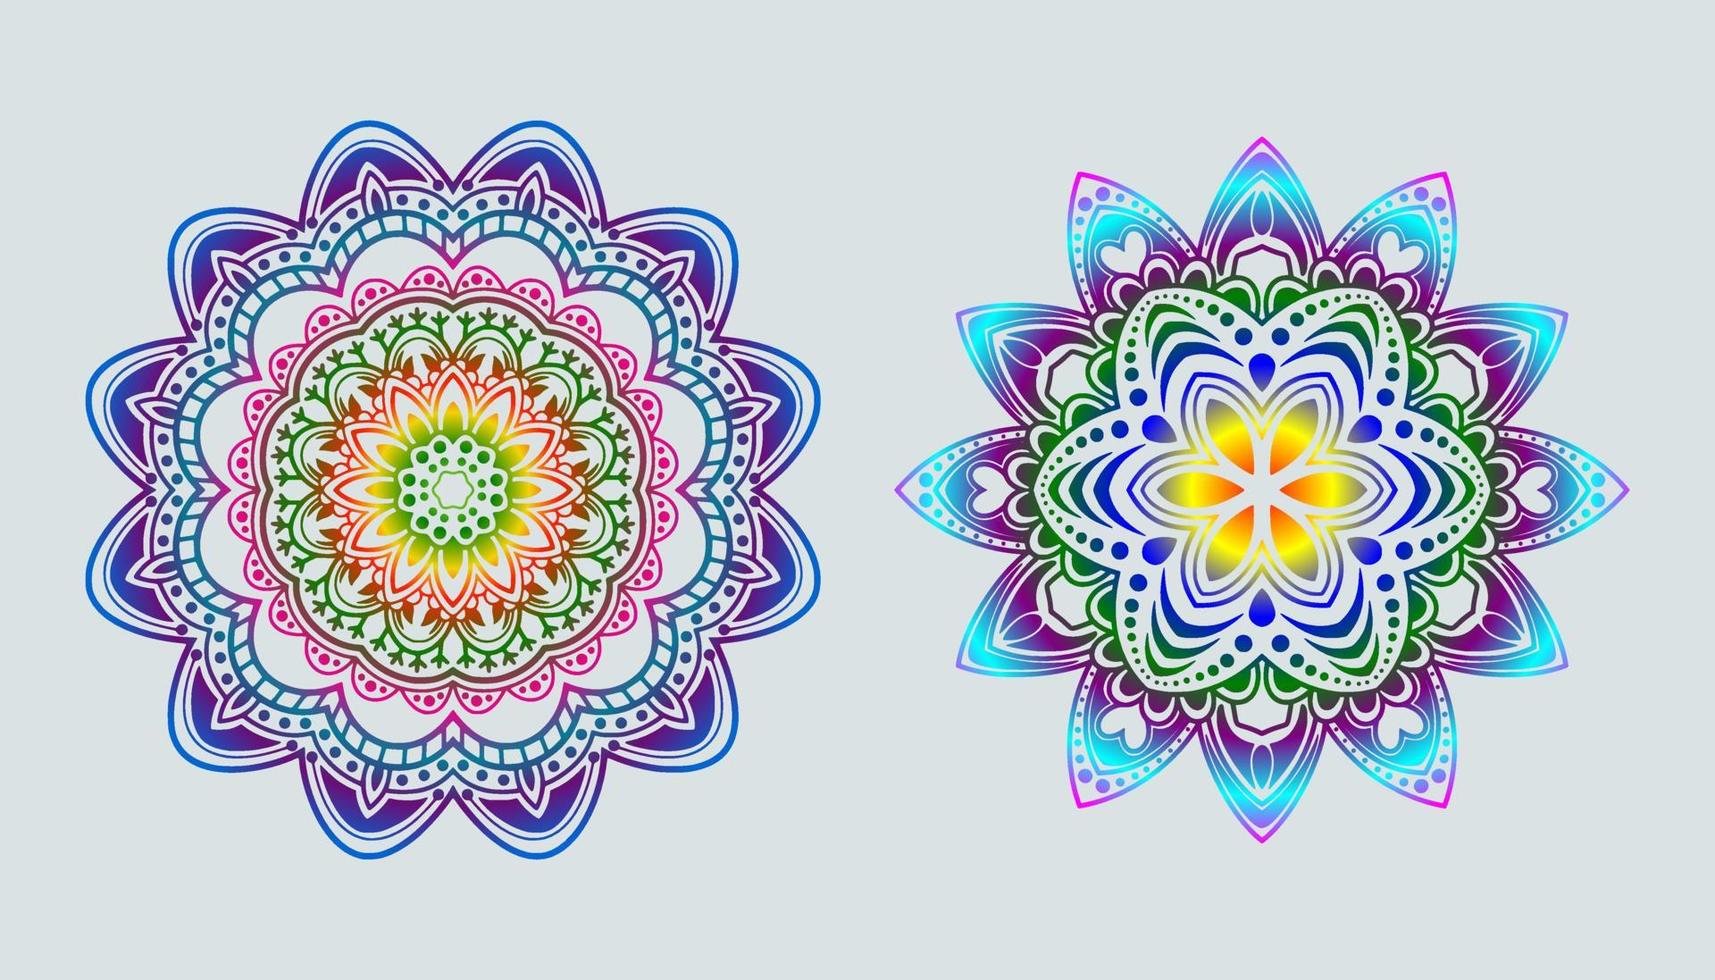 Mandala. Vintage decorative element. Mandala in rainbow colors. Mandala with floral motif. Yoga templates vector